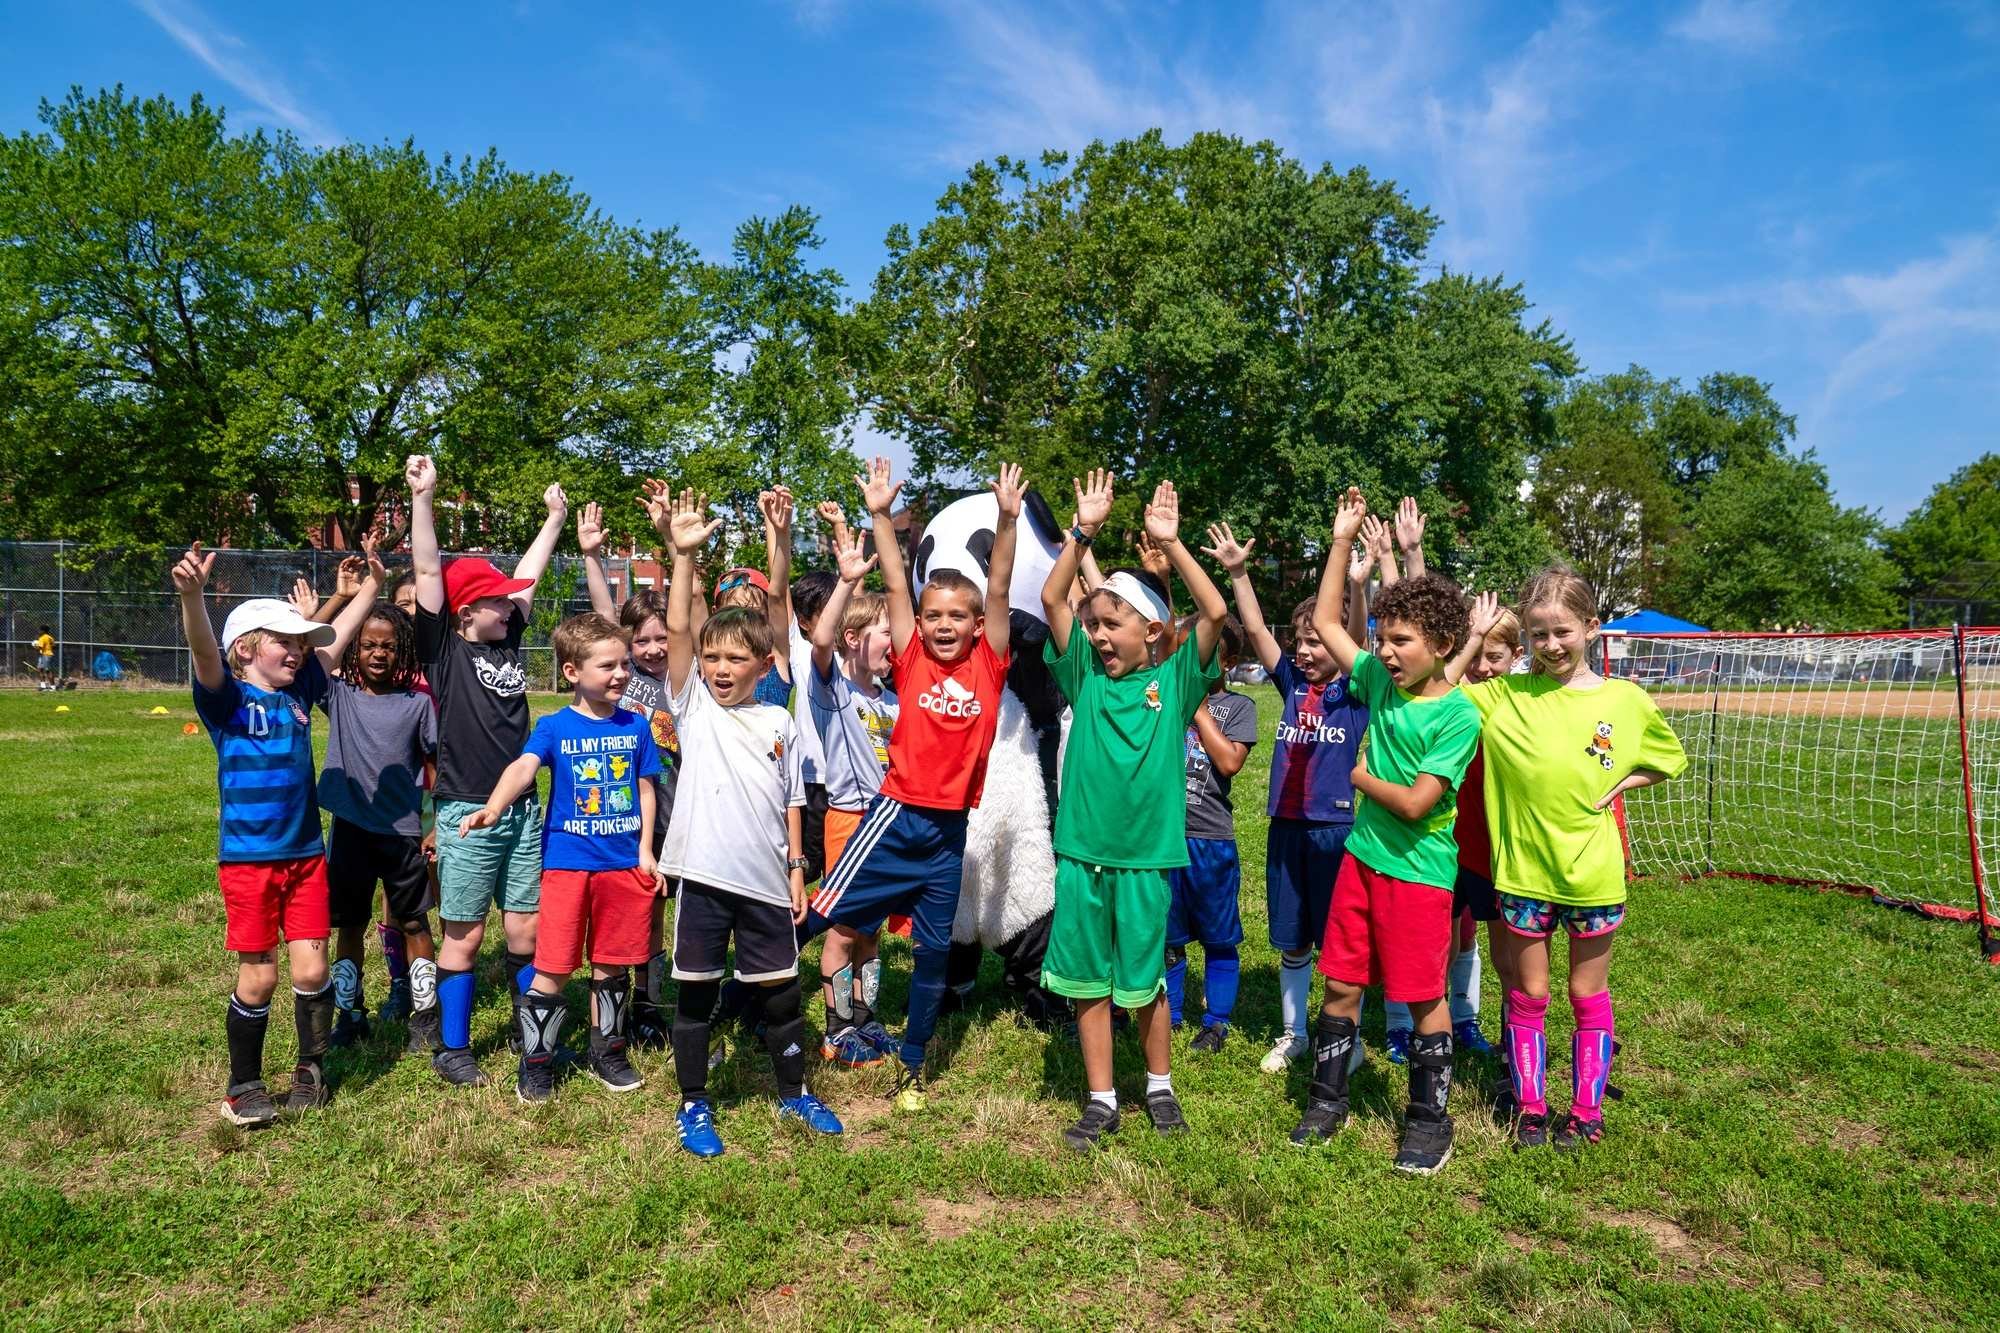 Dc-way-soccer-club-for-kids-in-washington-dc-summer-camp-at-tyler-elementary-school- 0249.jpg